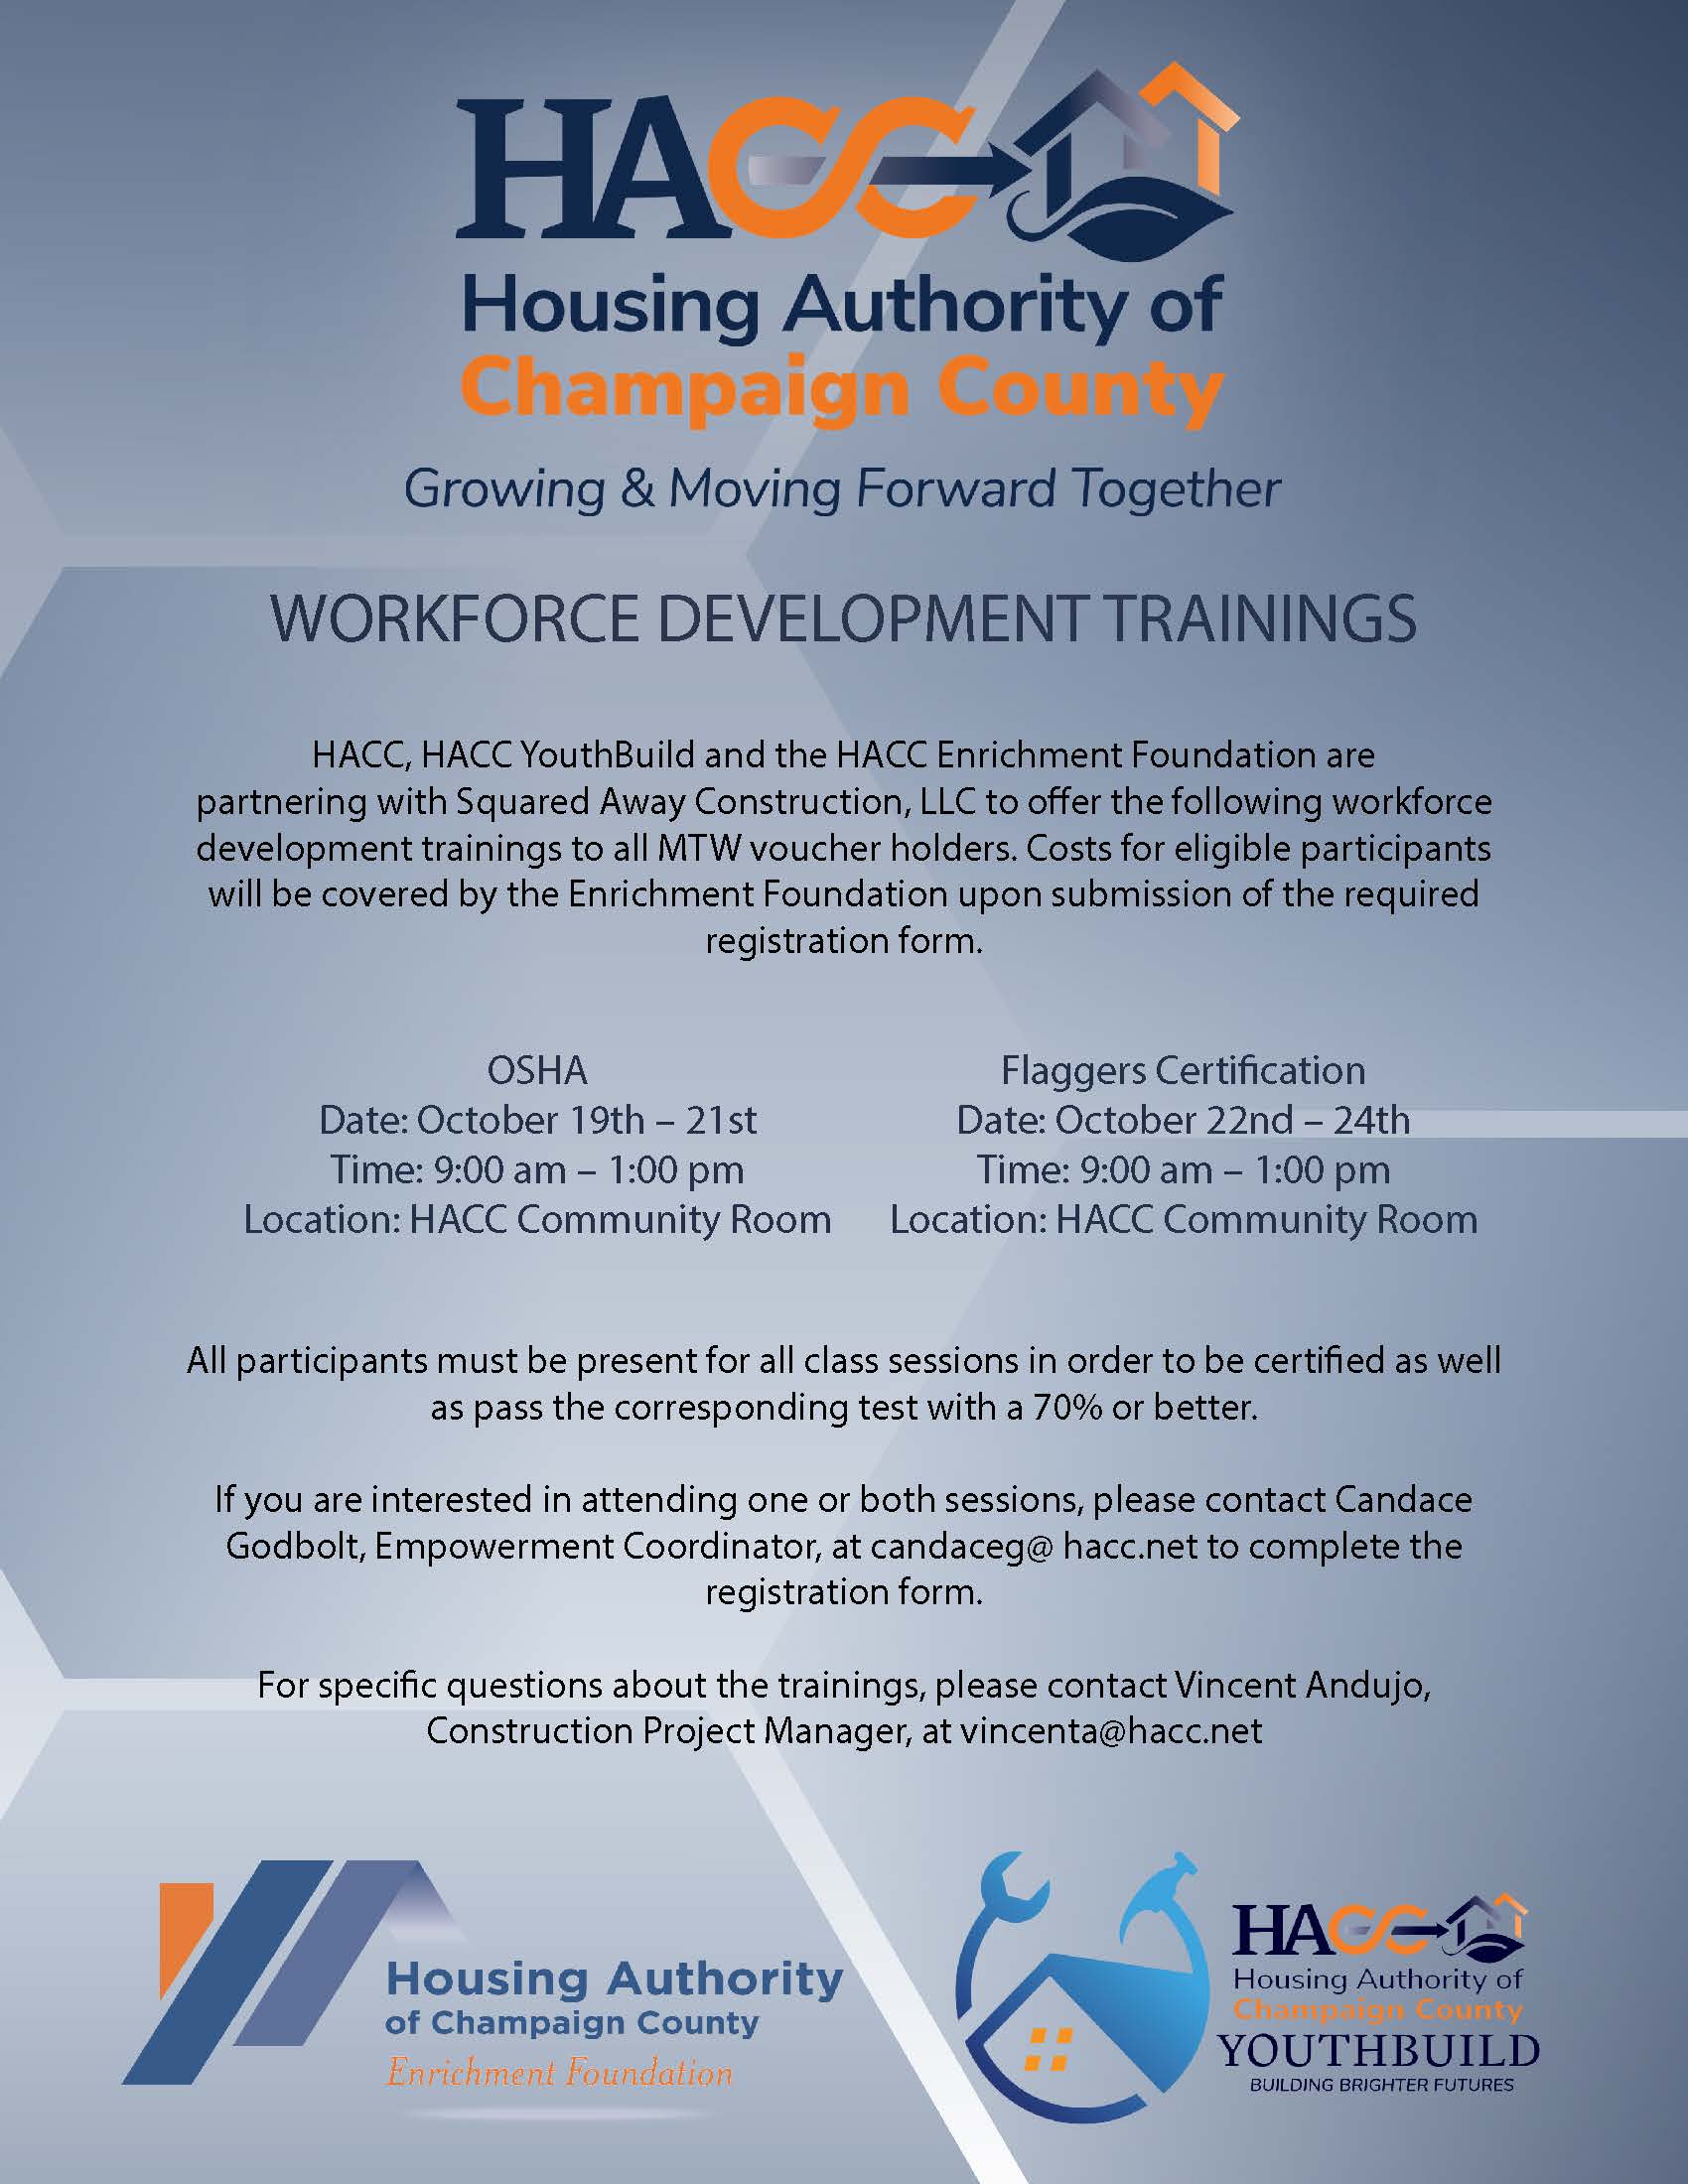 Workforce Development Trainings flyer, all information as listed below.